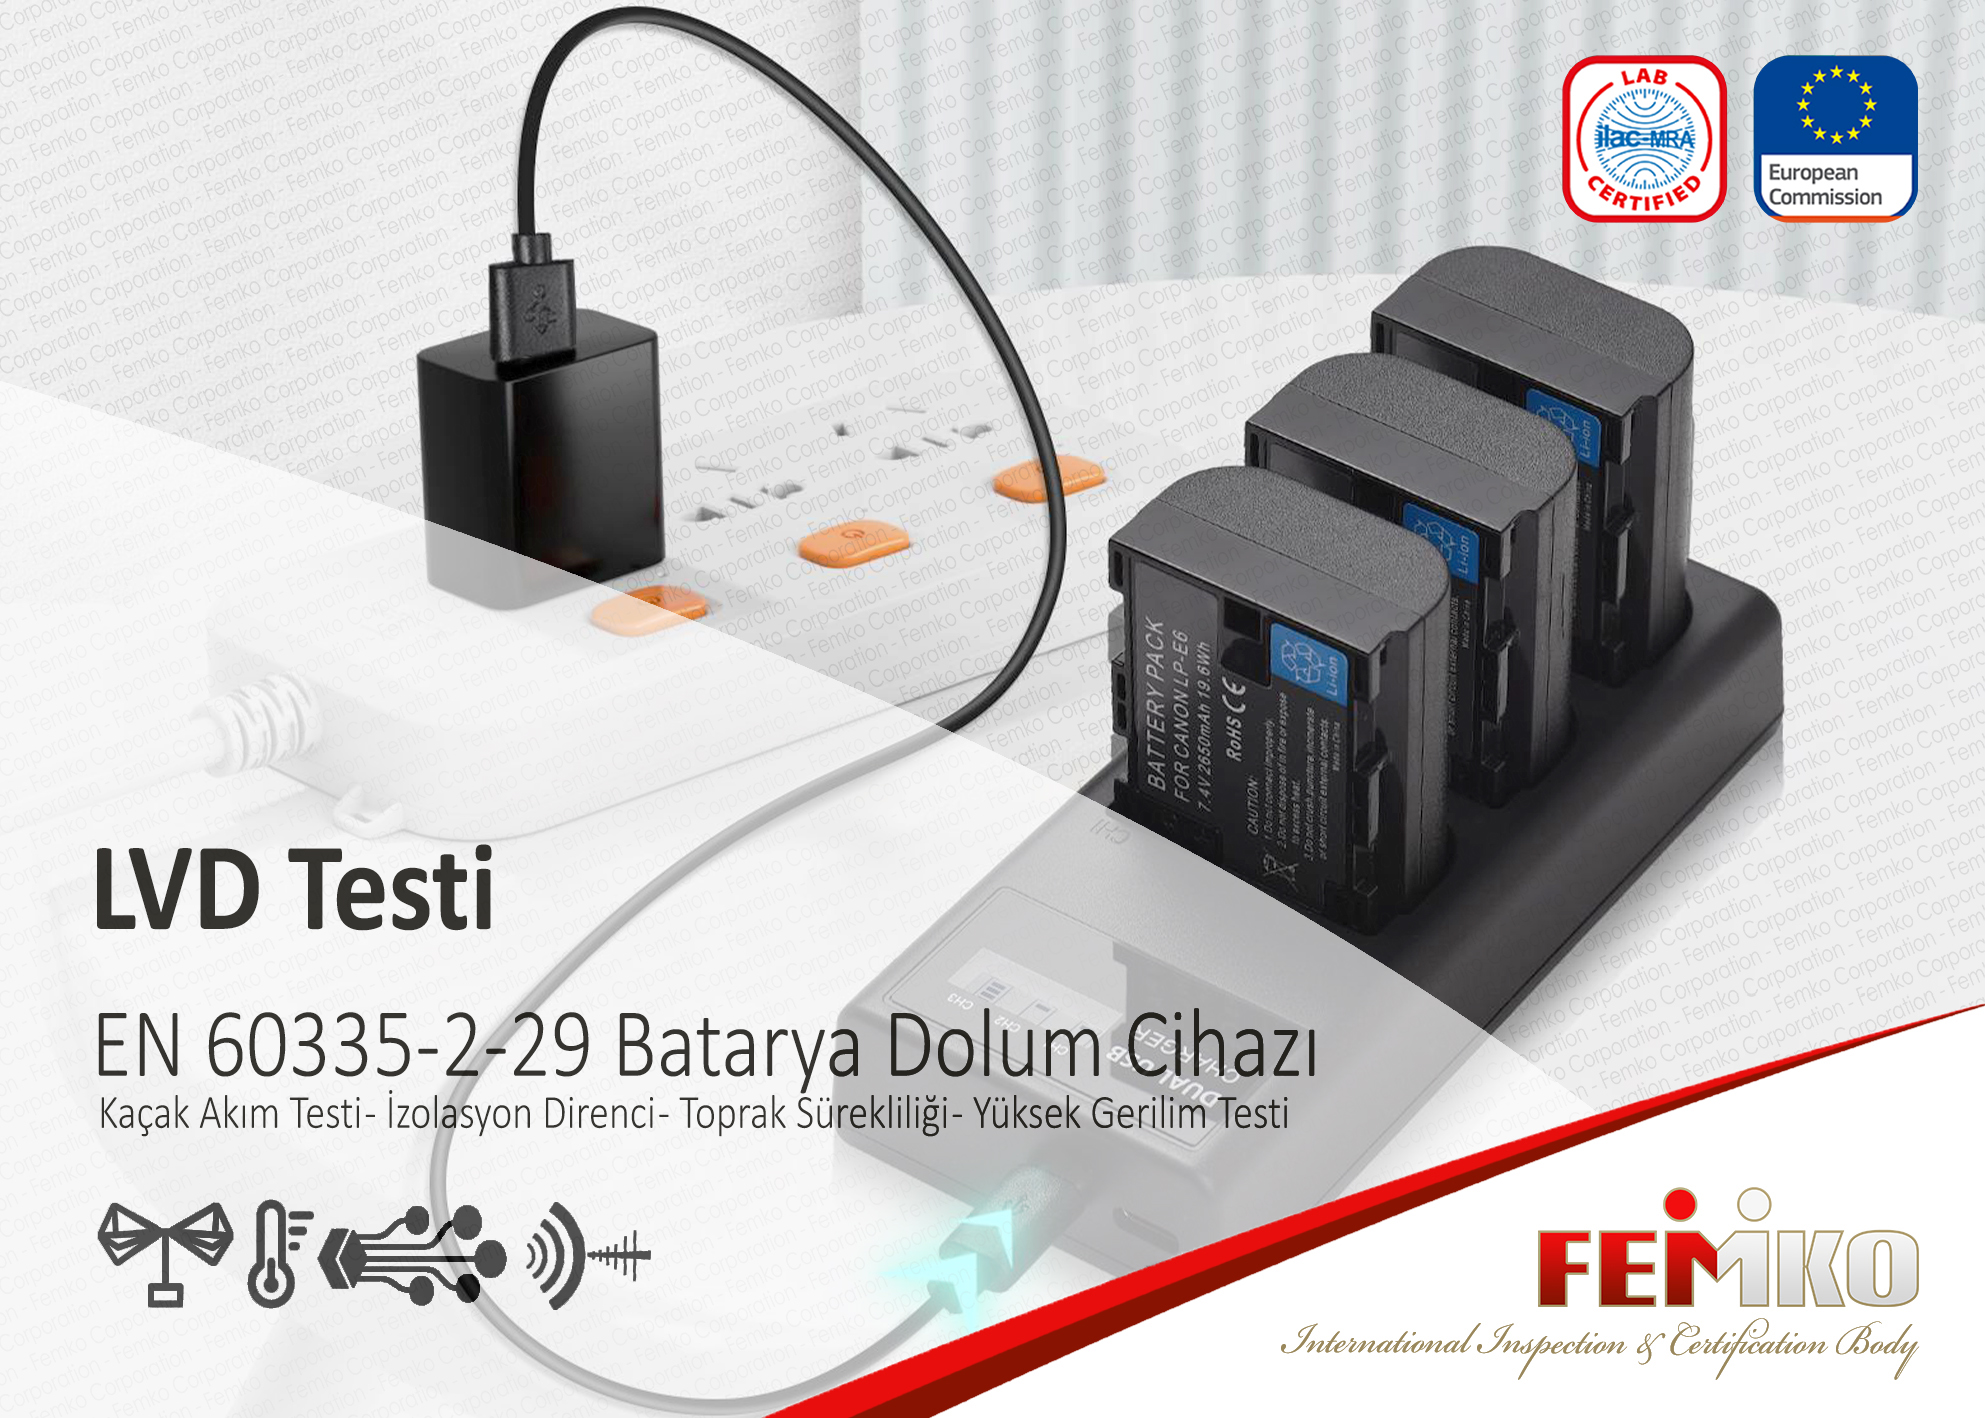 EN IEC 60335-2-29 Batarya Dolum Cihazı LVD Testi